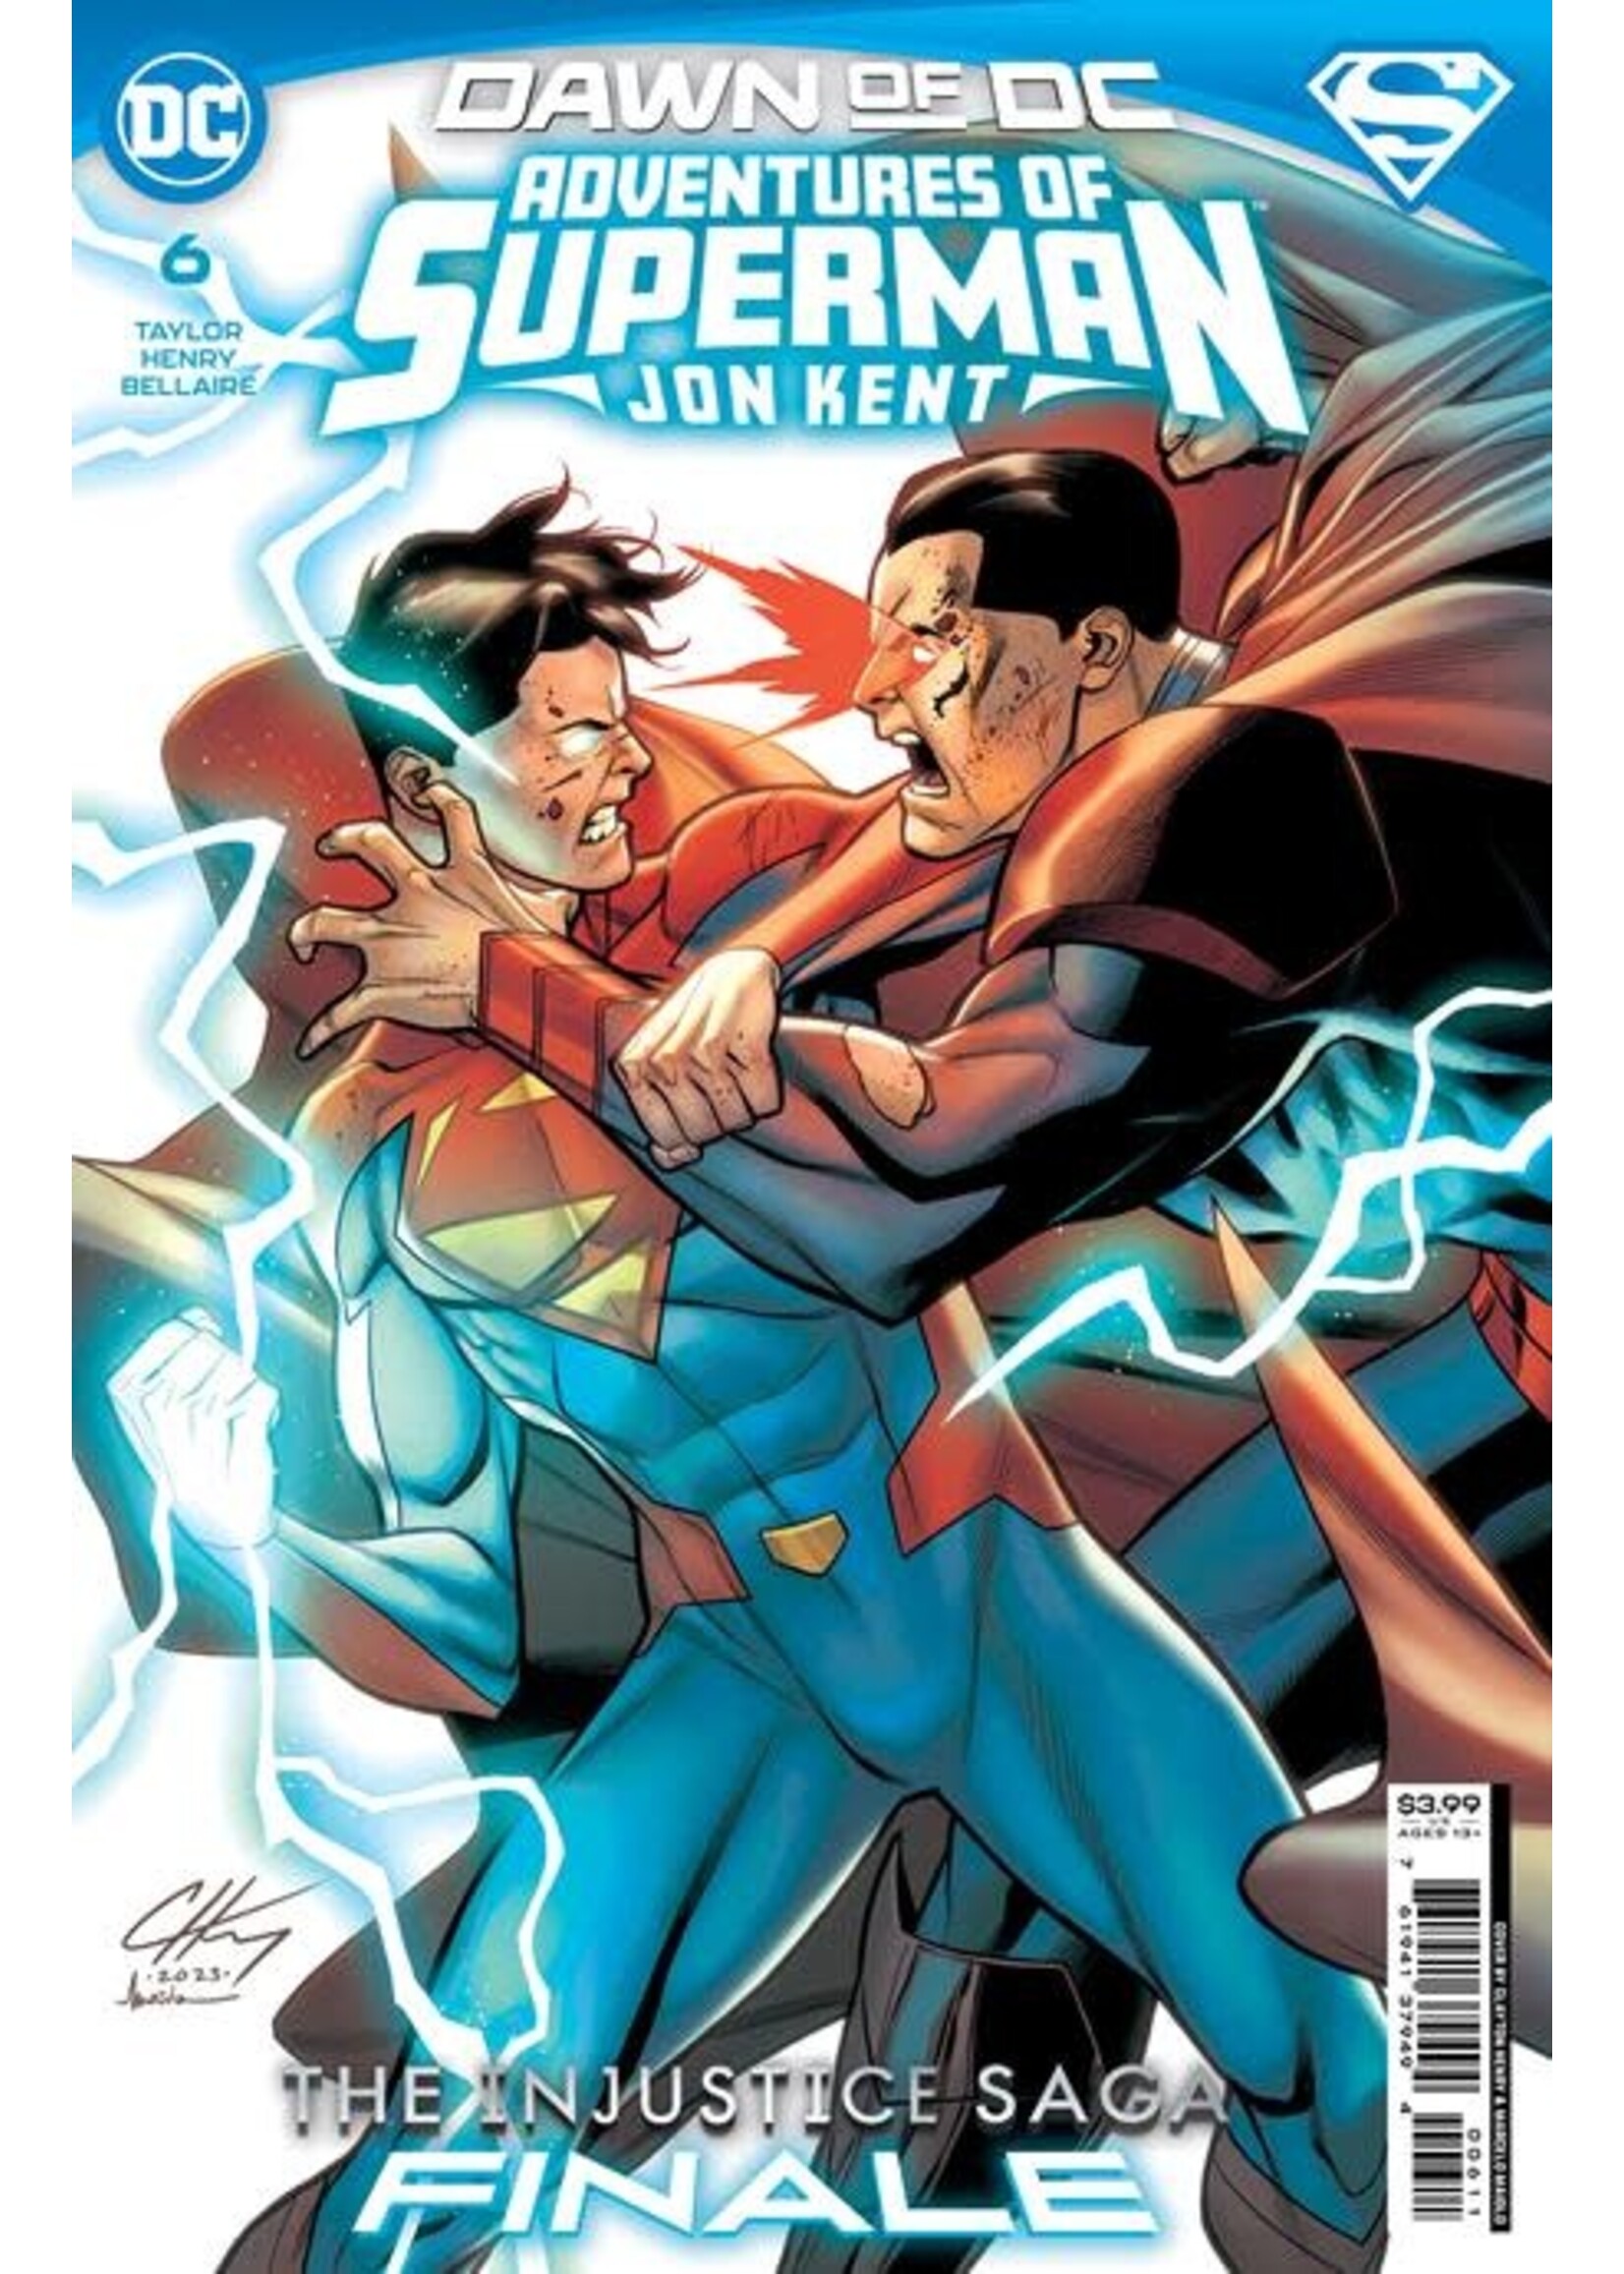 DC COMICS ADVENTURES OF SUPERMAN JON KENT #6